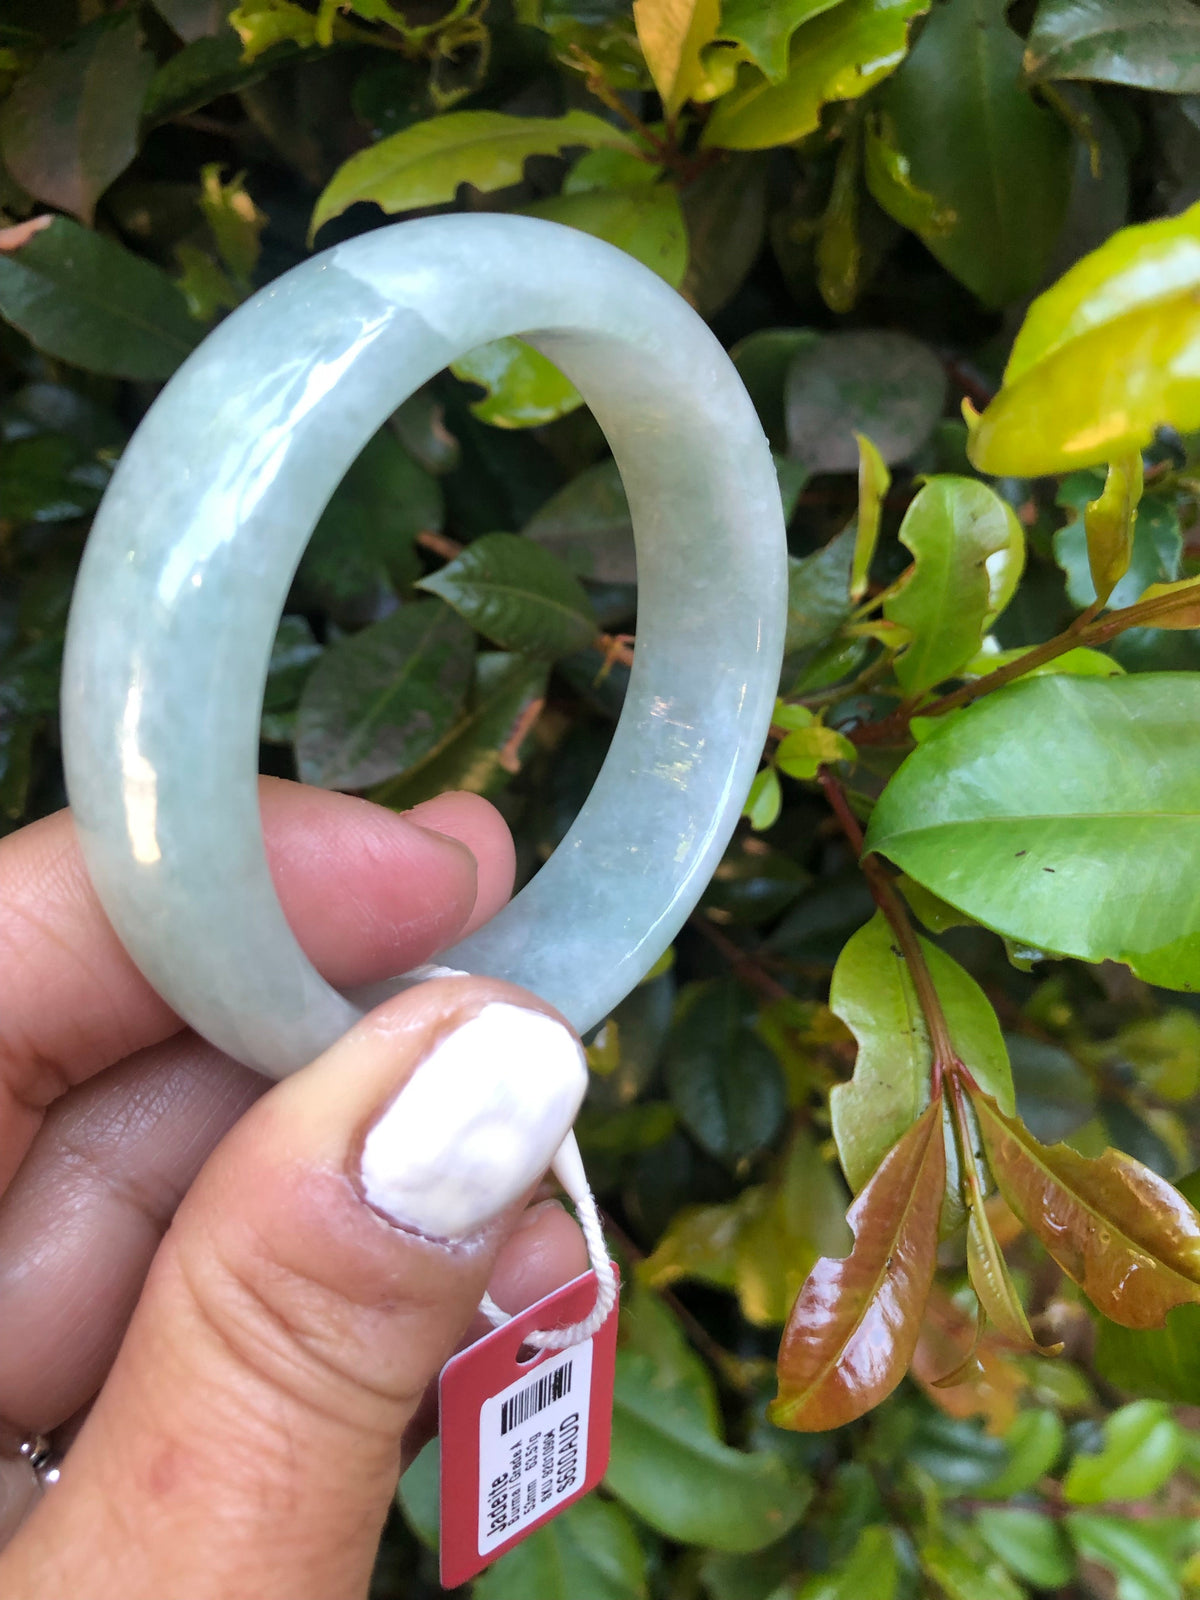 Real Grade A Light green Traditional Jade Bangle Bracelet - 53mm Half Moon